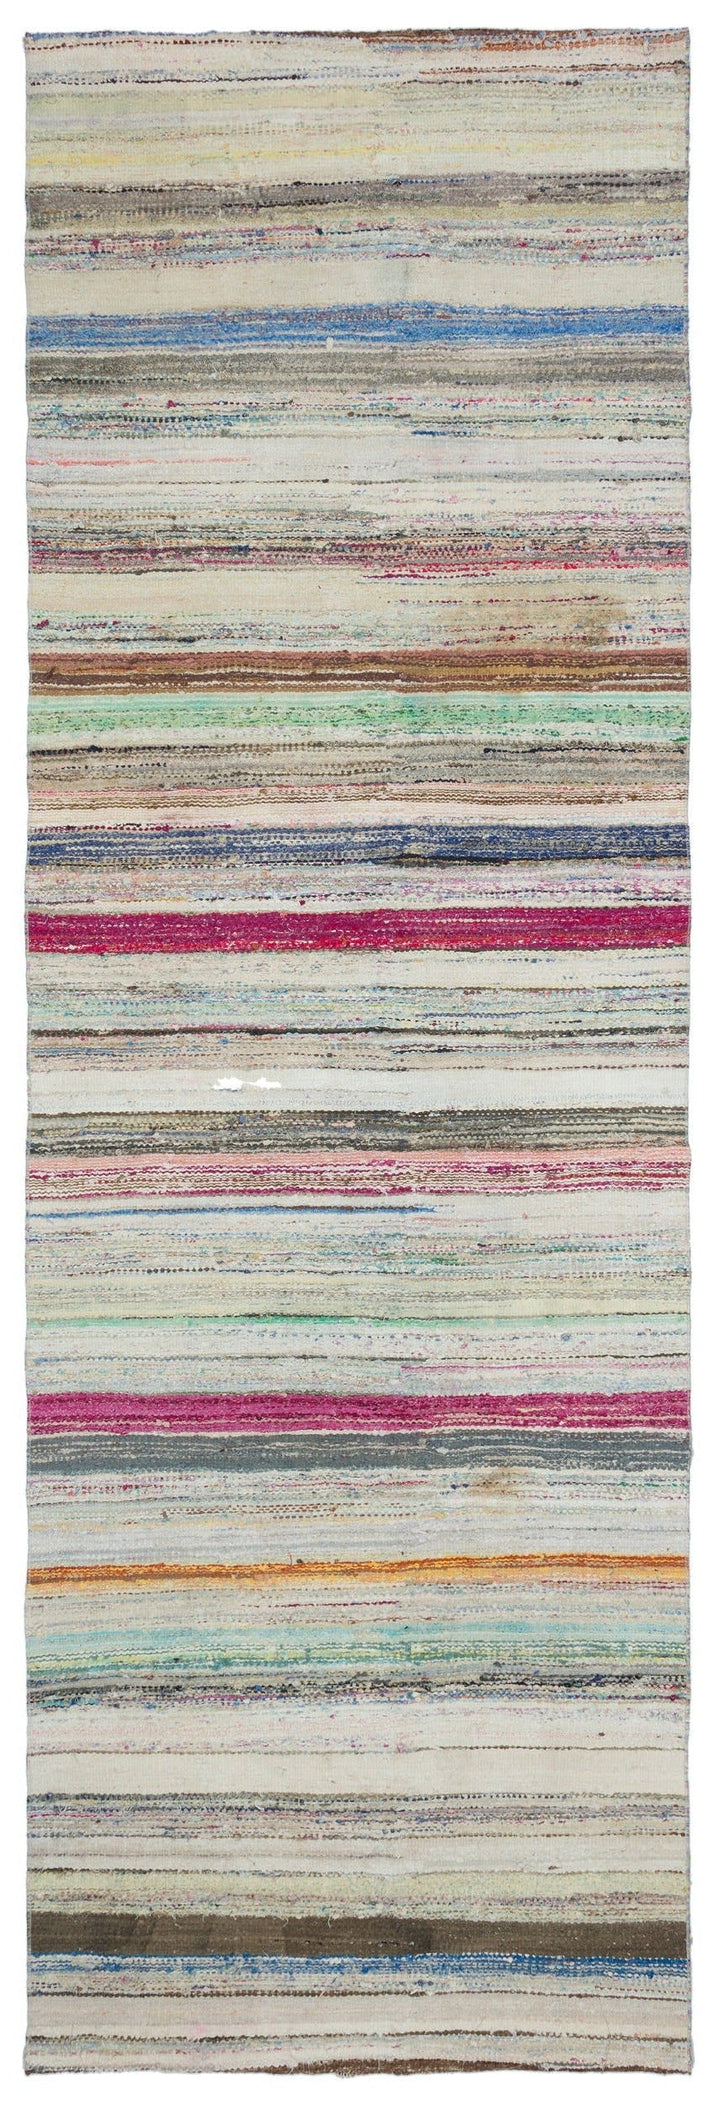 Cretan Beige Striped Wool Hand-Woven Carpet 124 x 376